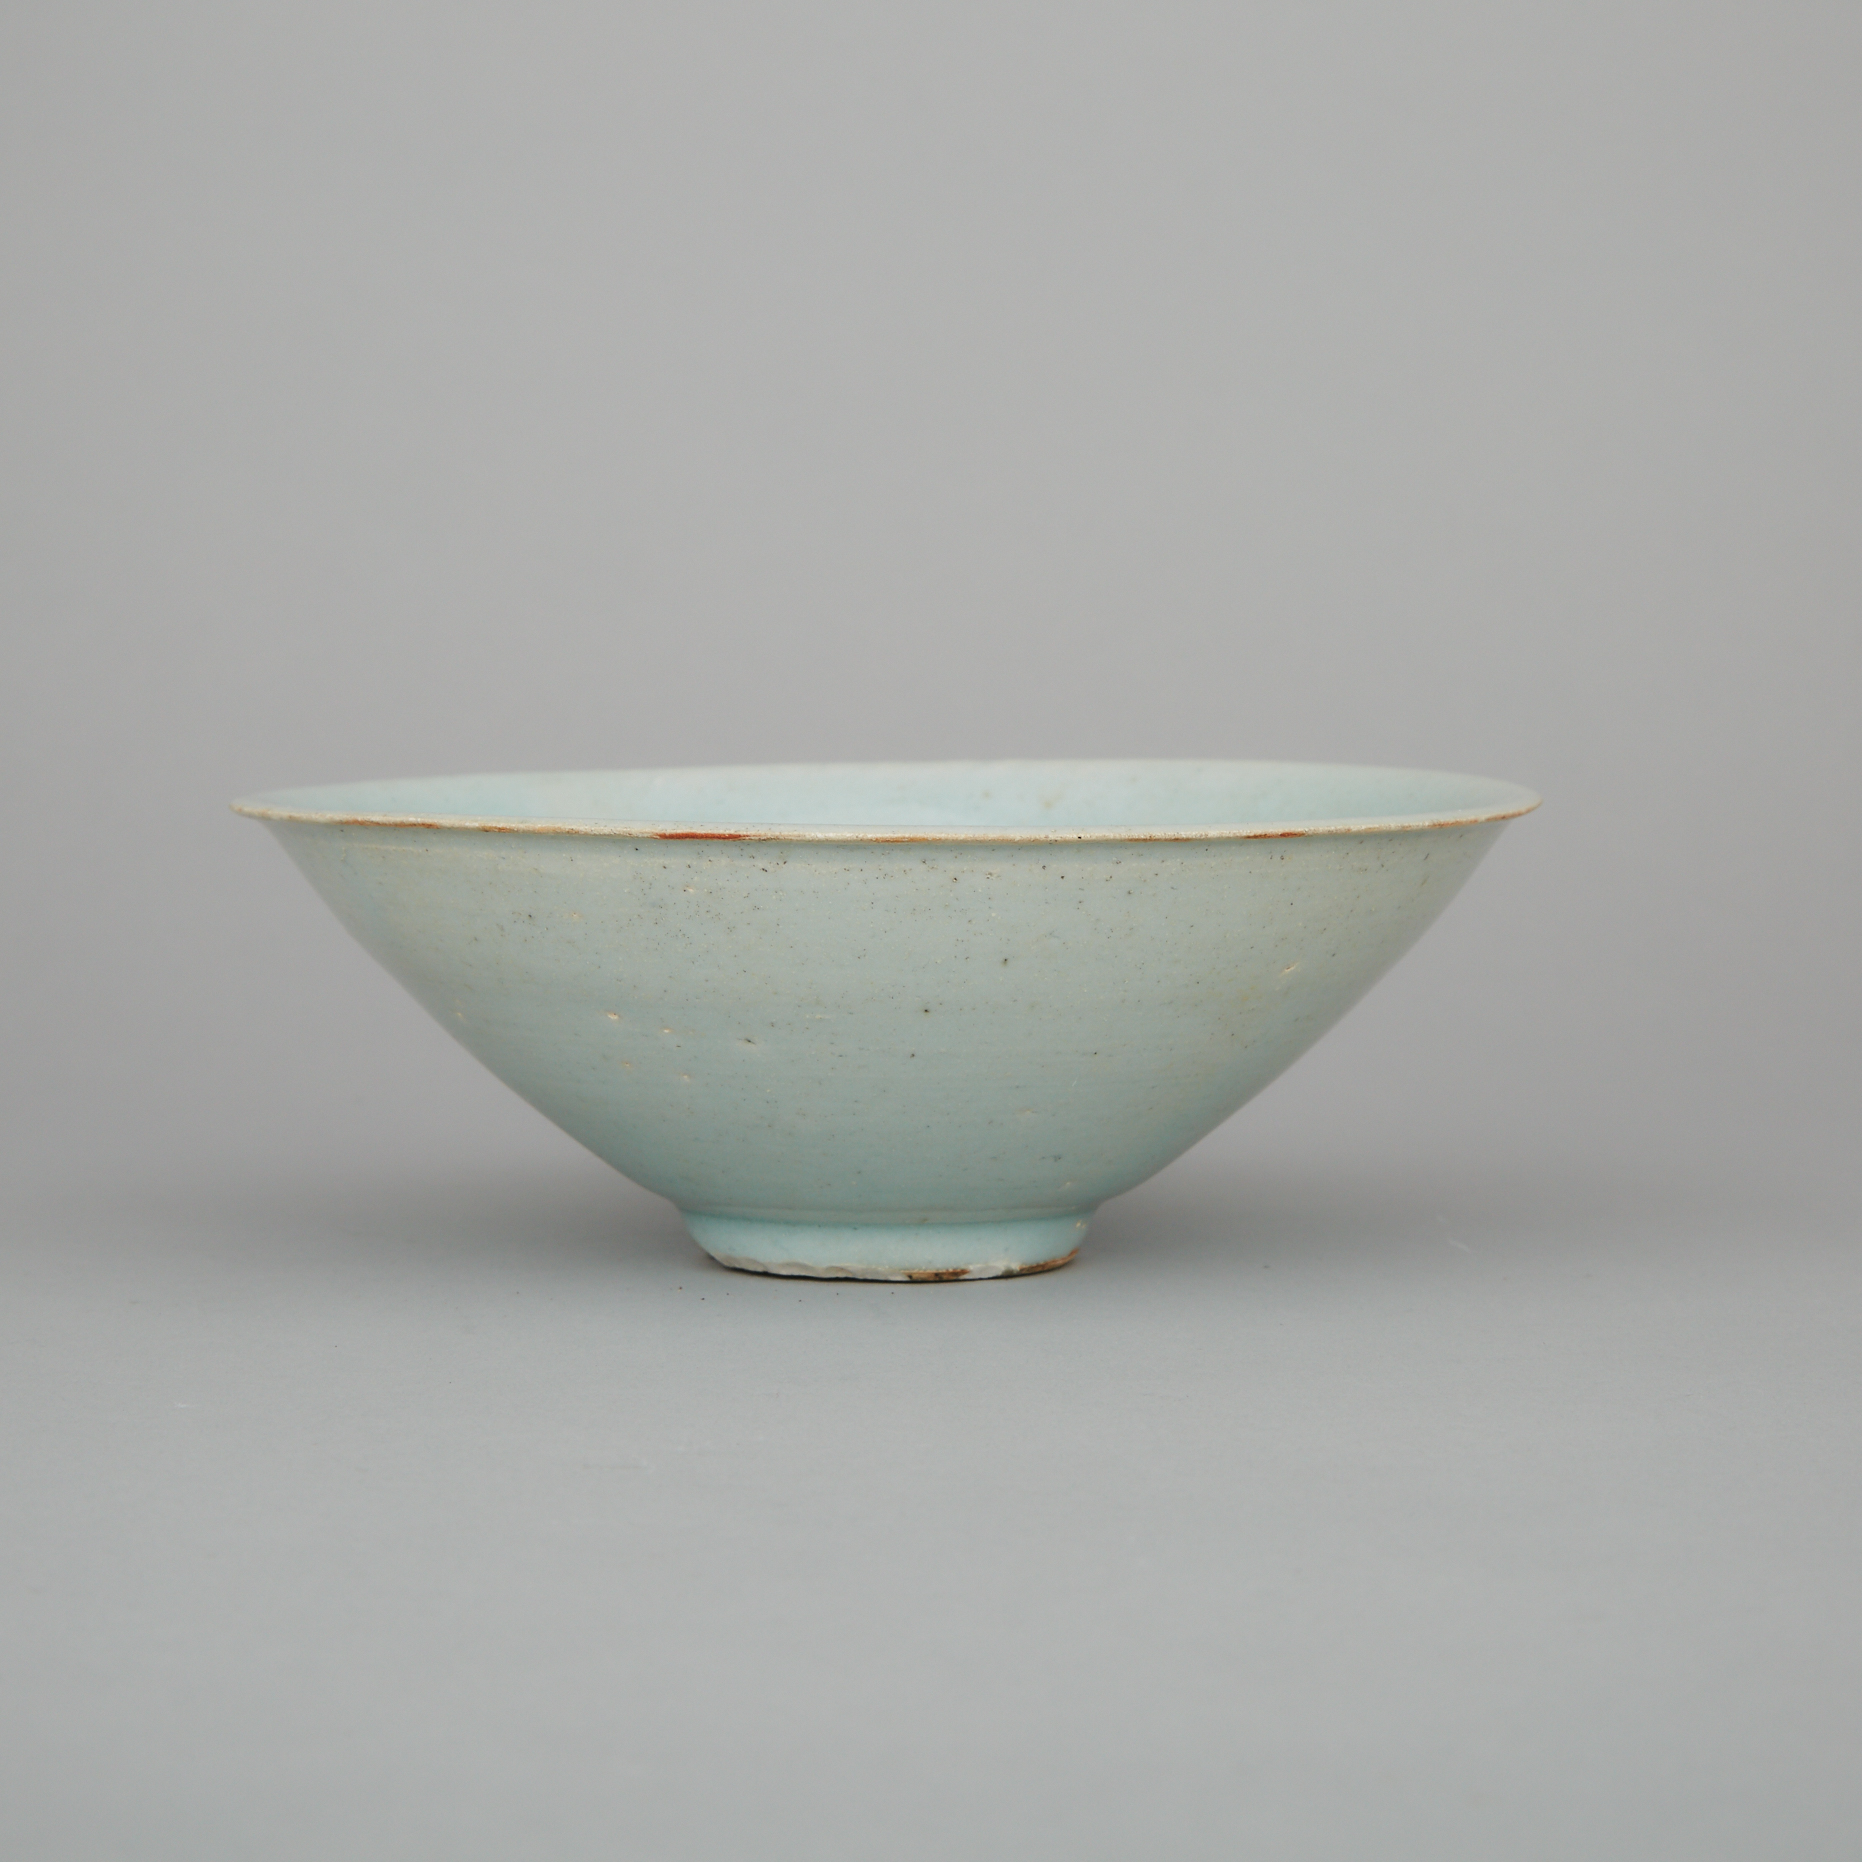 A Light Blue Glazed Yingqing Bowl, Yuan Dynasty